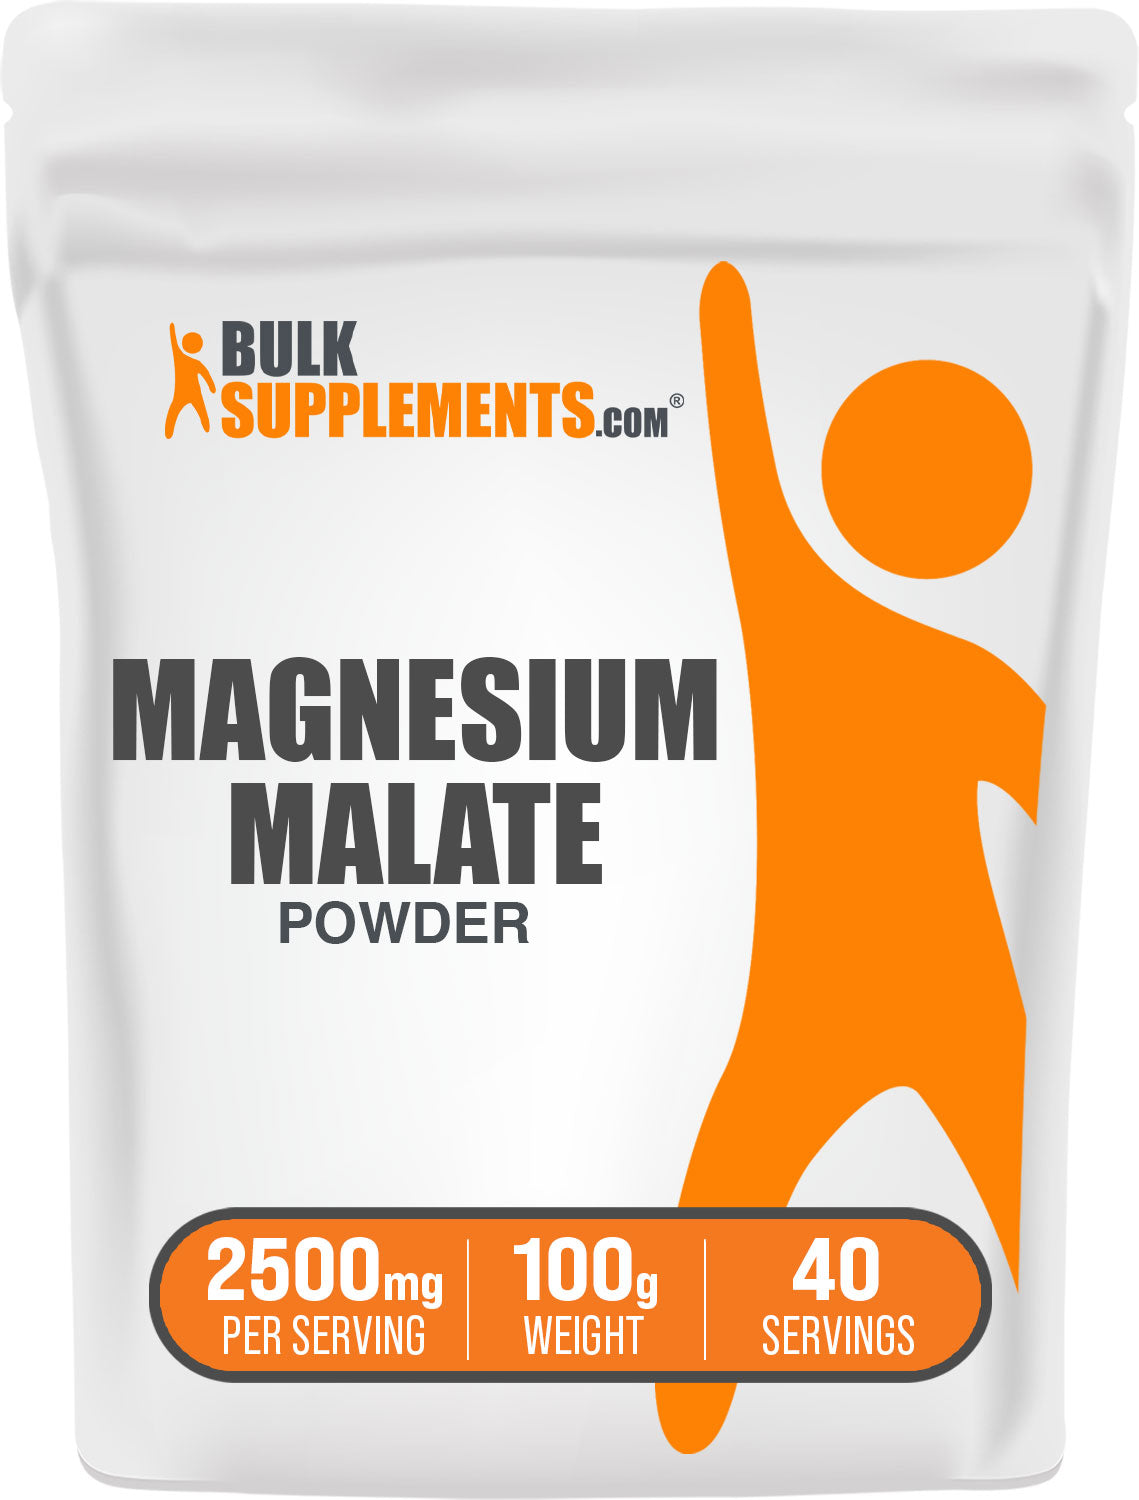 Magnesium Malate 100g Bag, 2500mg per serving